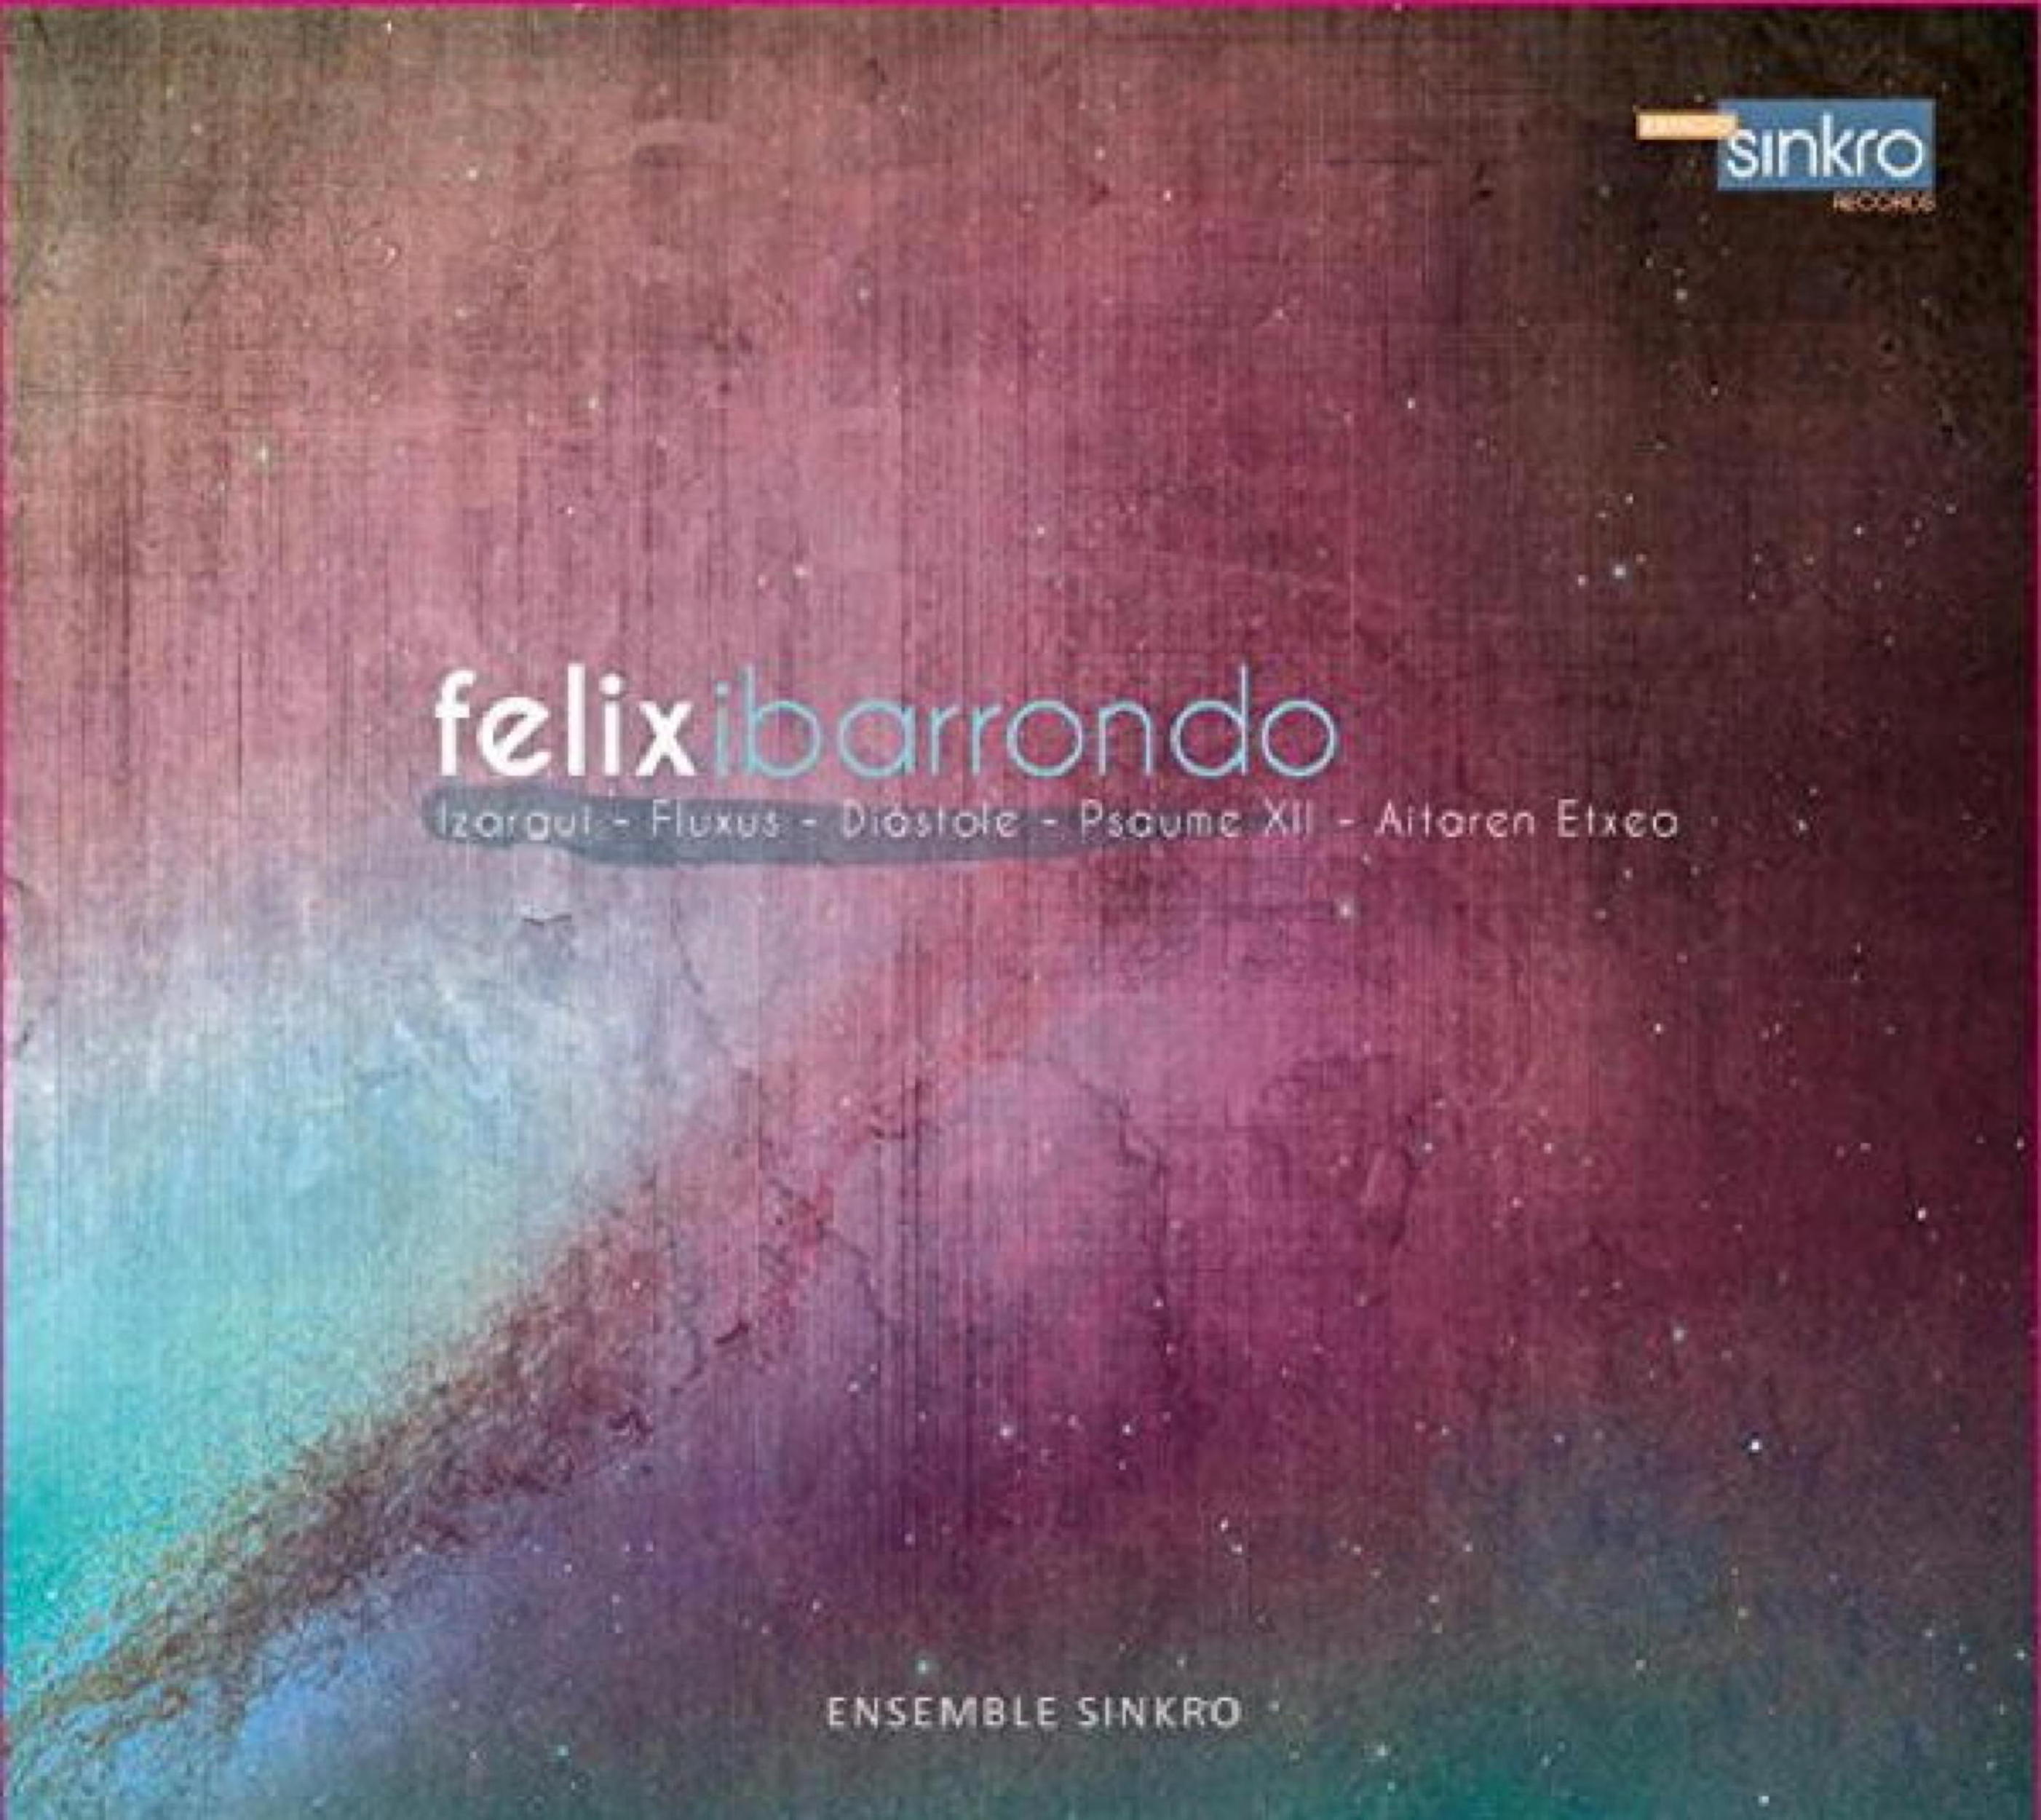 Félix Ibarrondo by Ensemble Sinkro